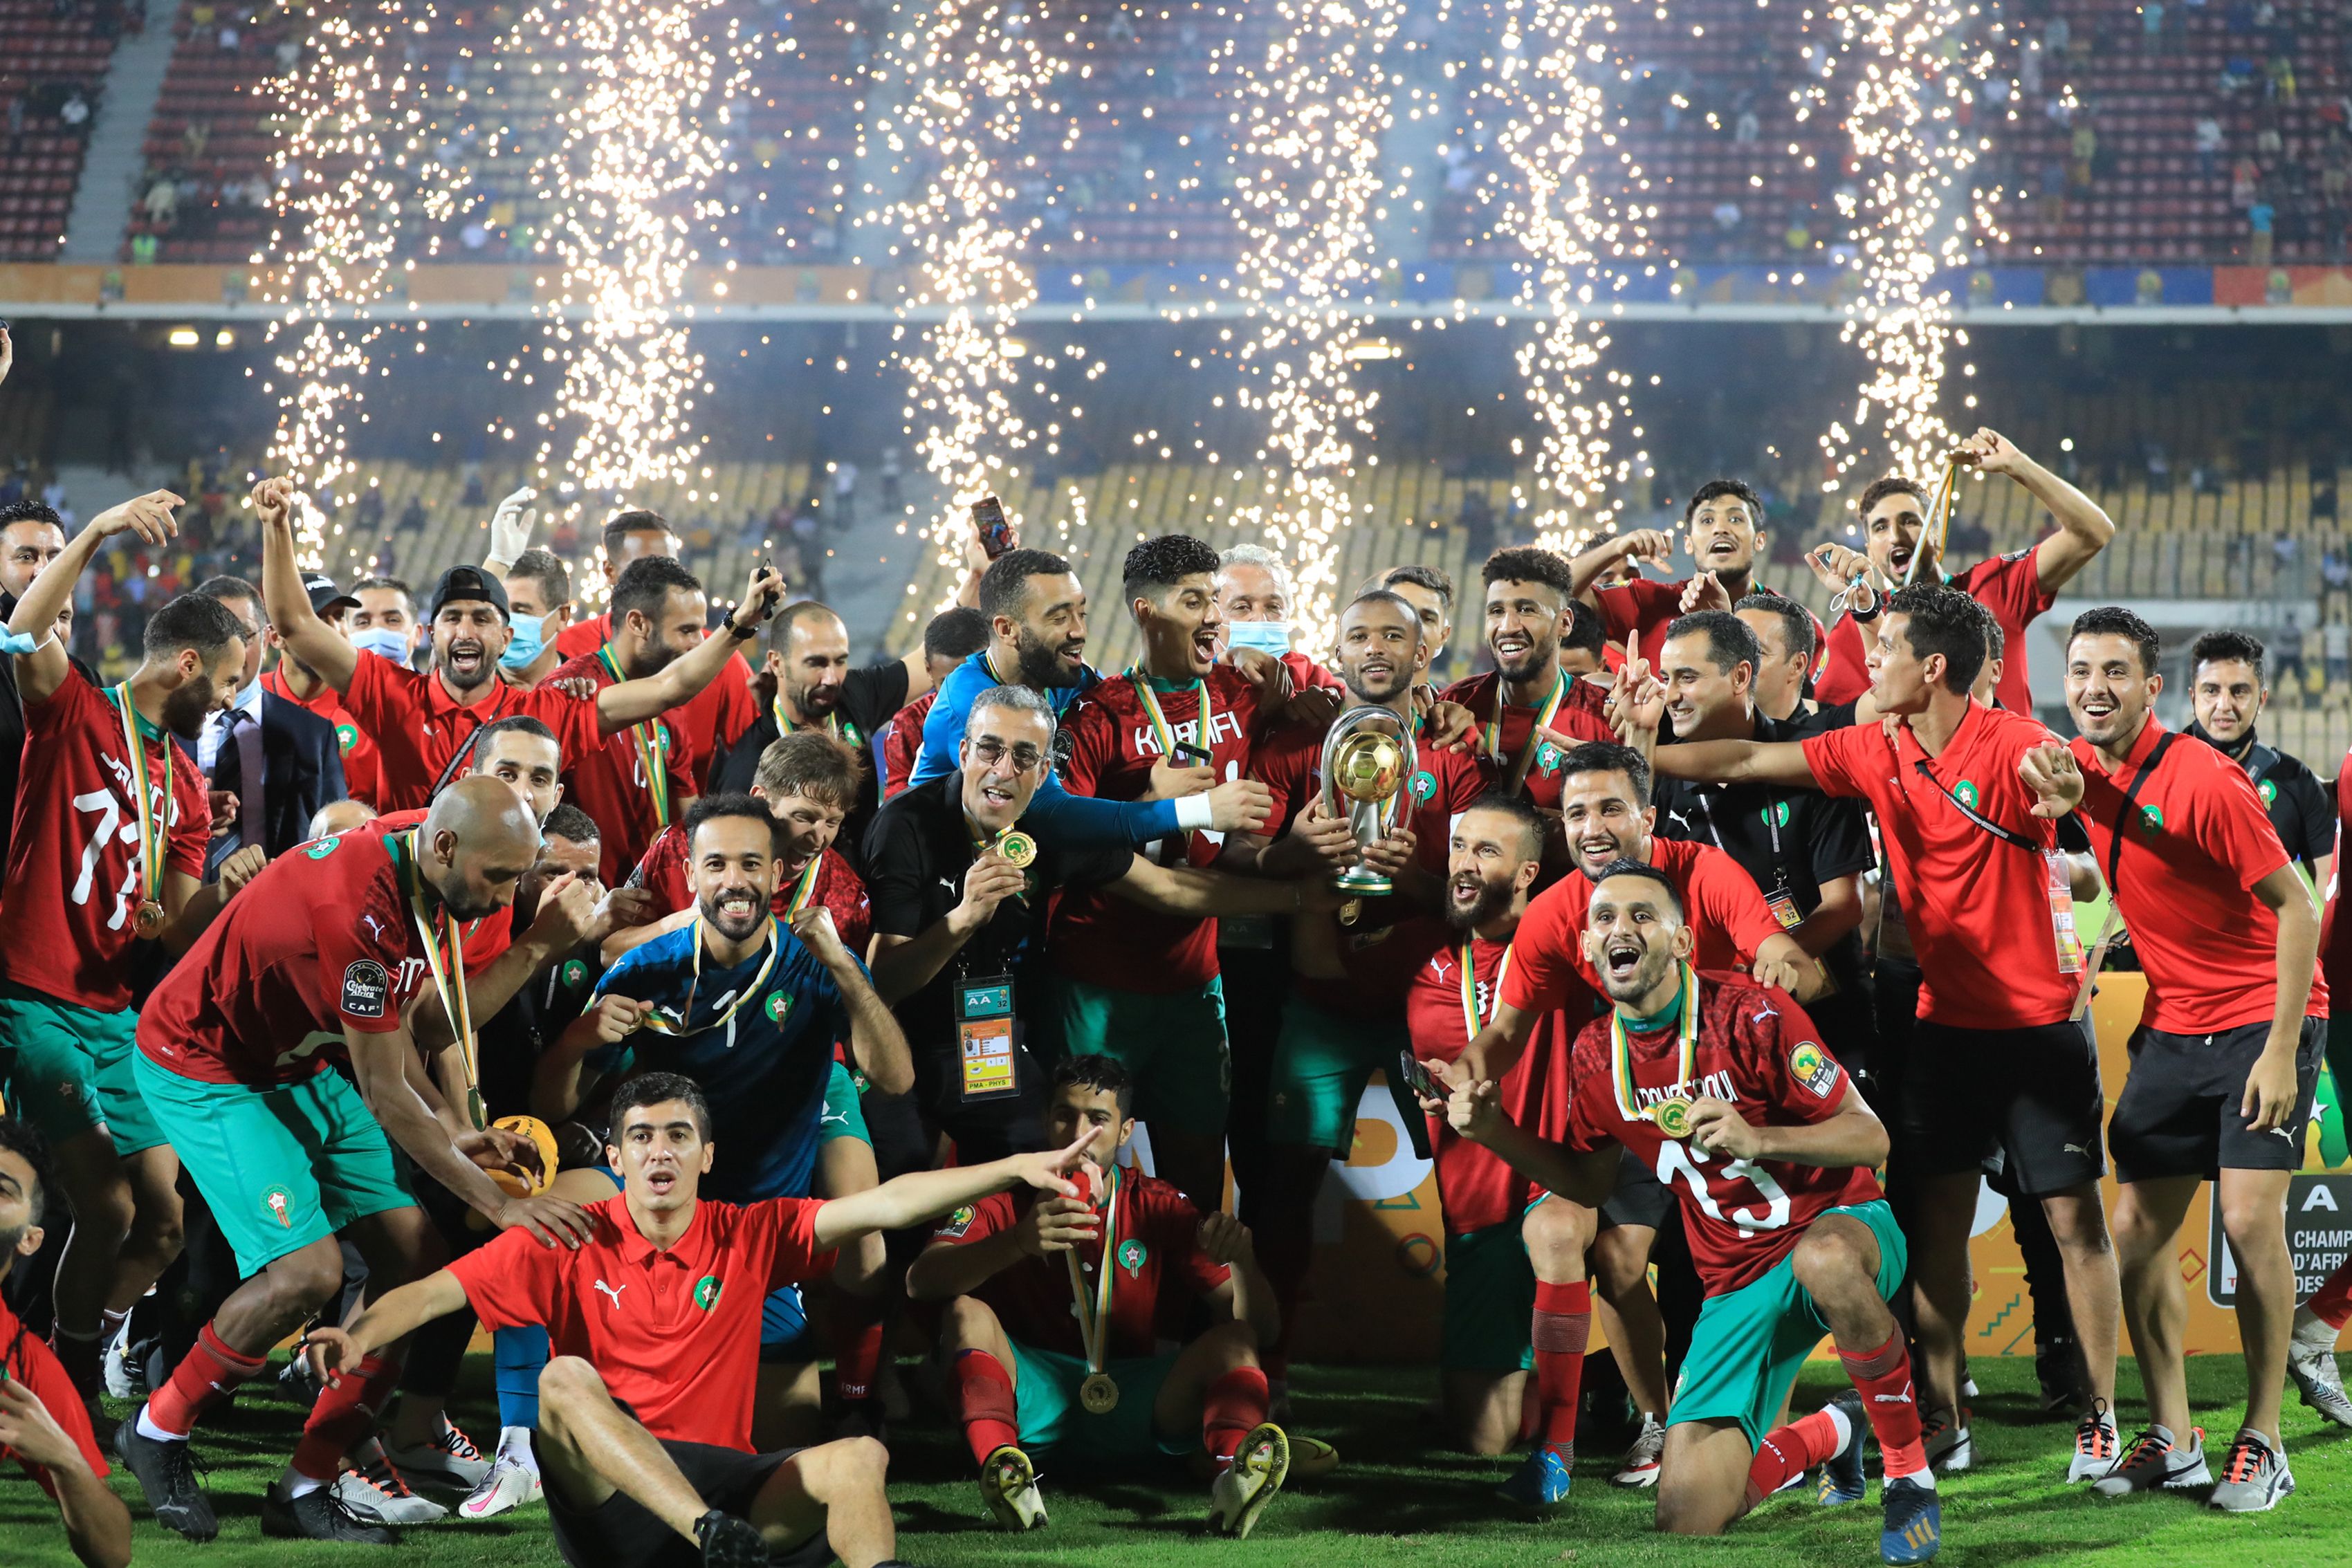 Morocco fumes over Adidas design of Algerian football jersey